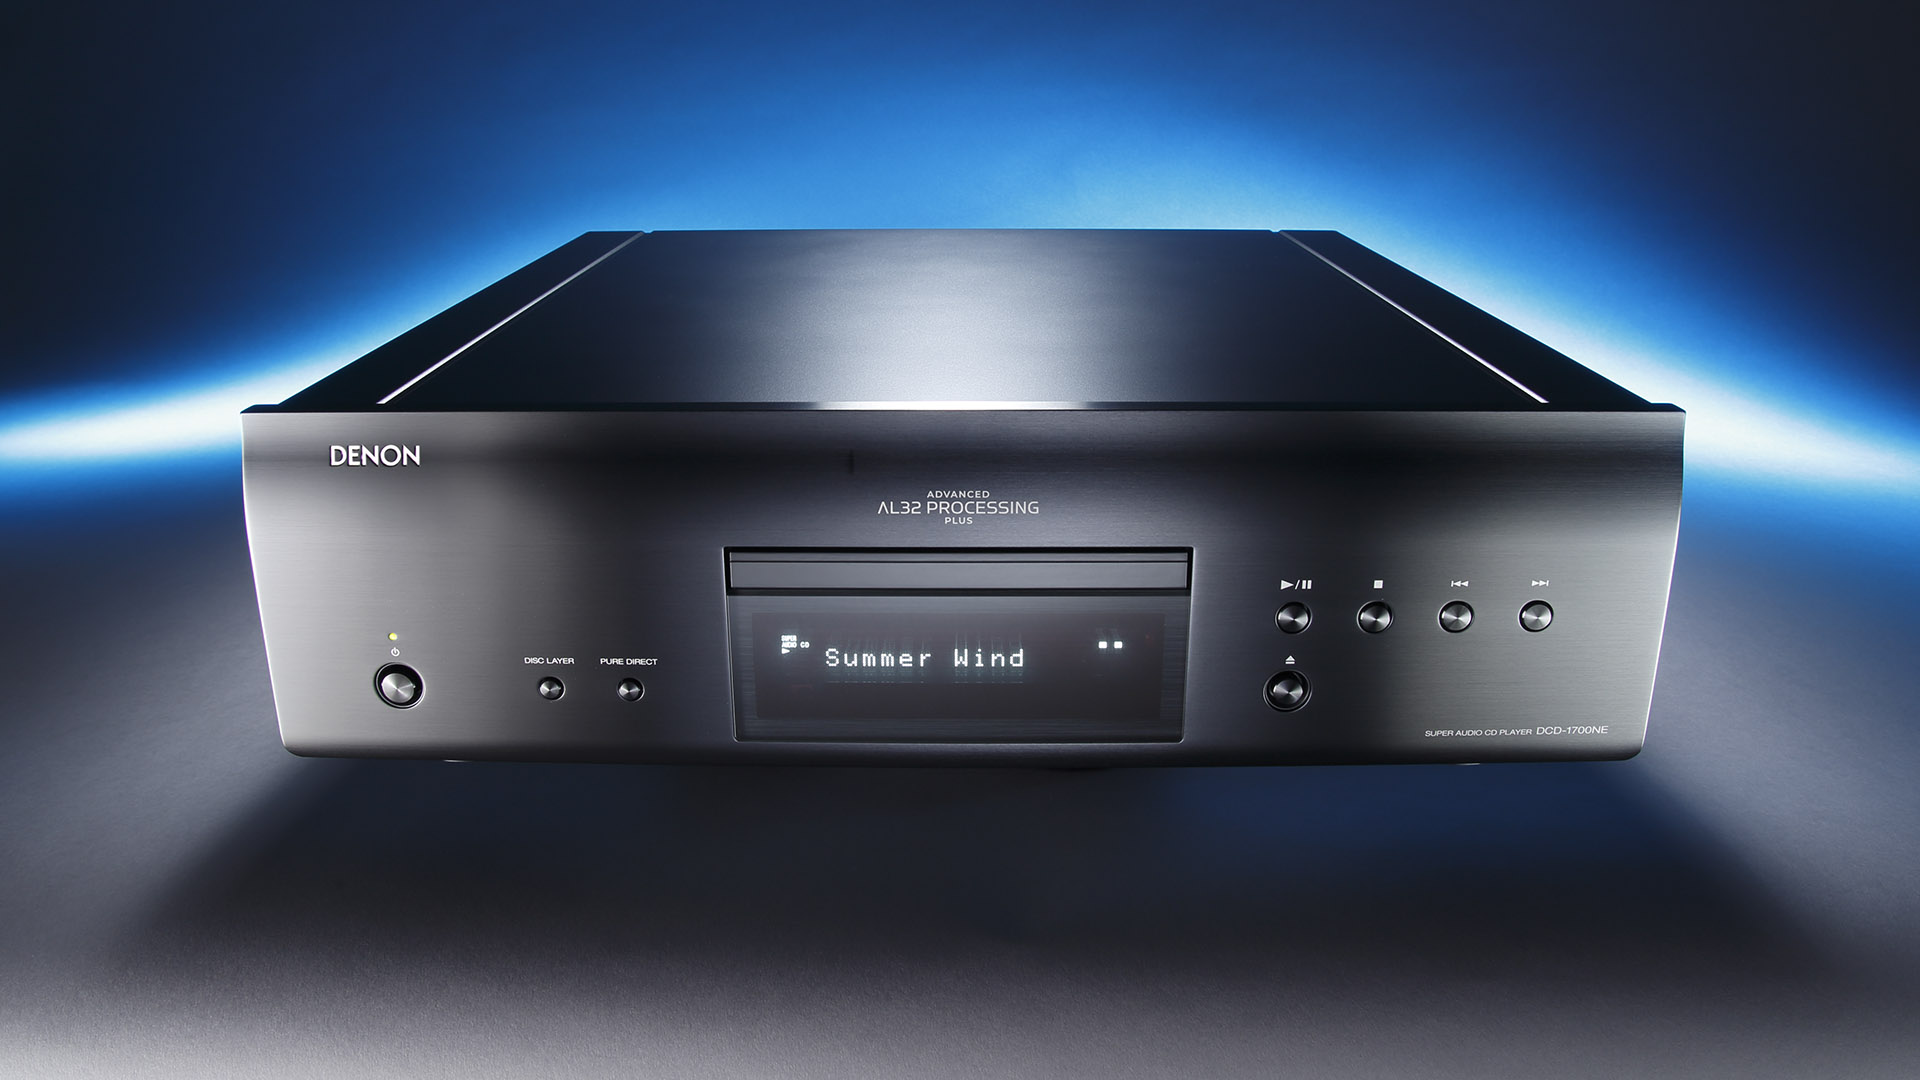 NEWS: Denon Announces New DCD-1700NE CD/SACD Player